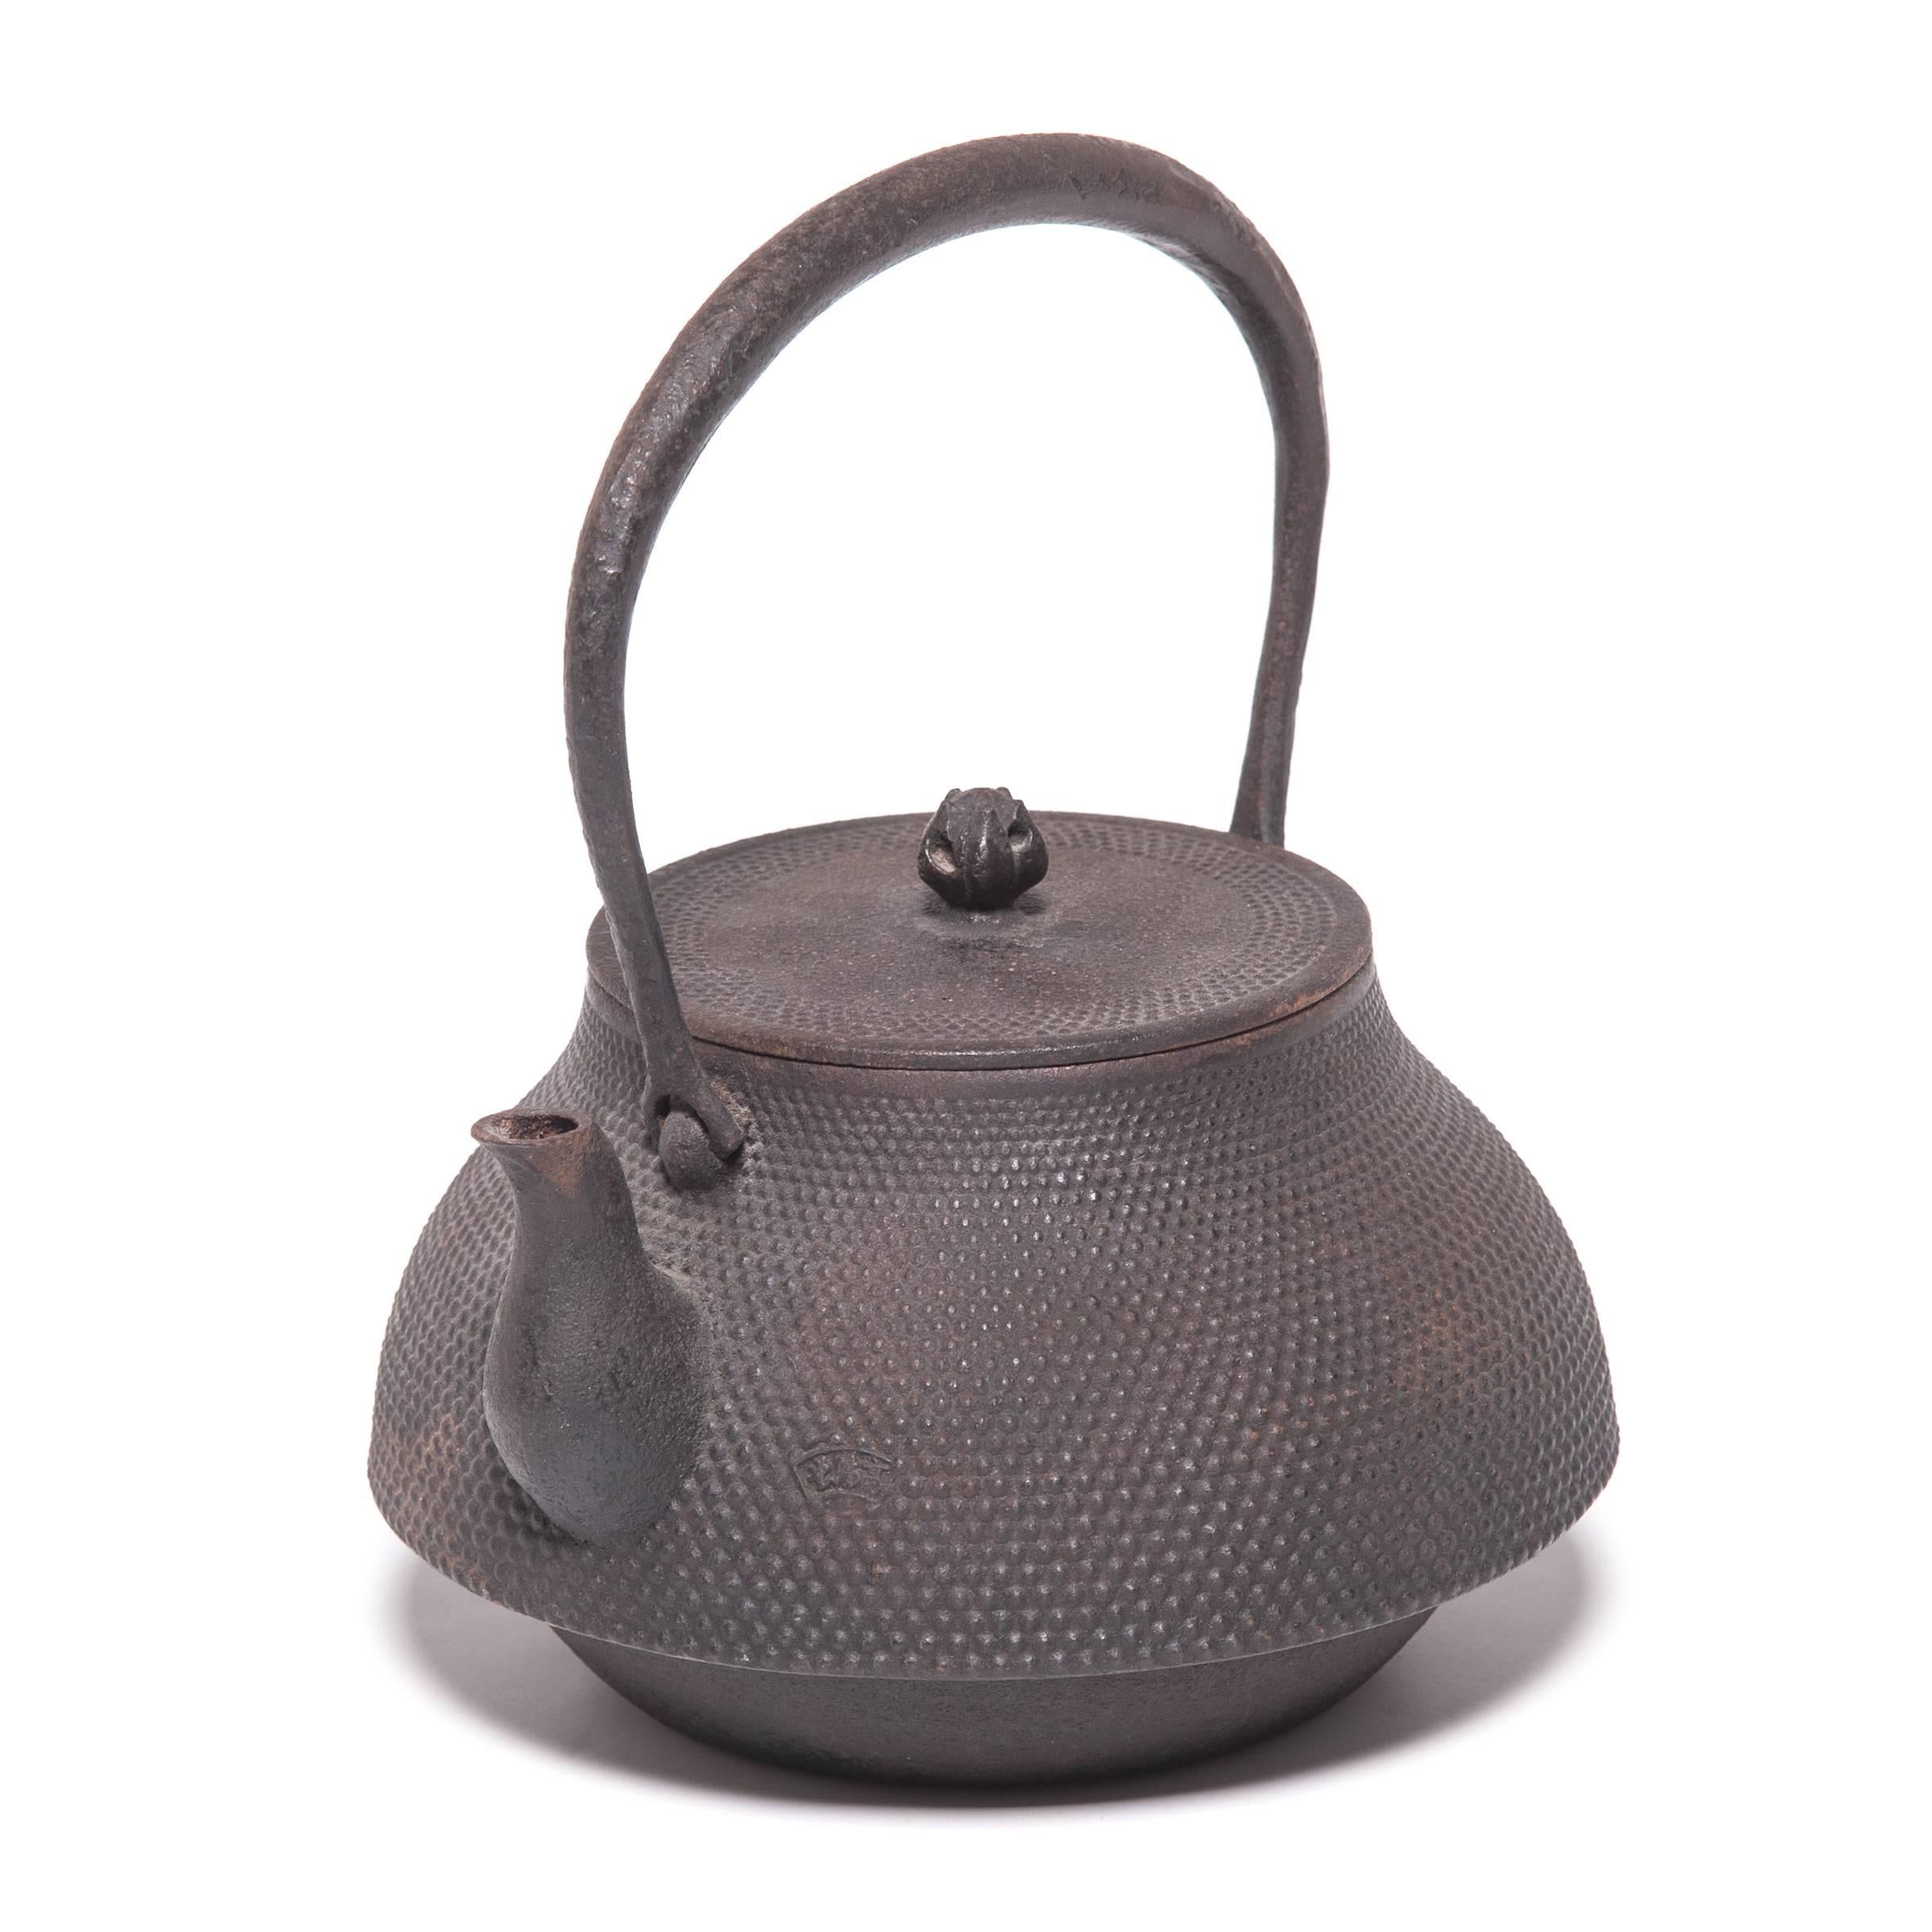 Meiji Textured Japanese Tetsubin Teapot with Lotus Bud Knob, c. 1900 For Sale